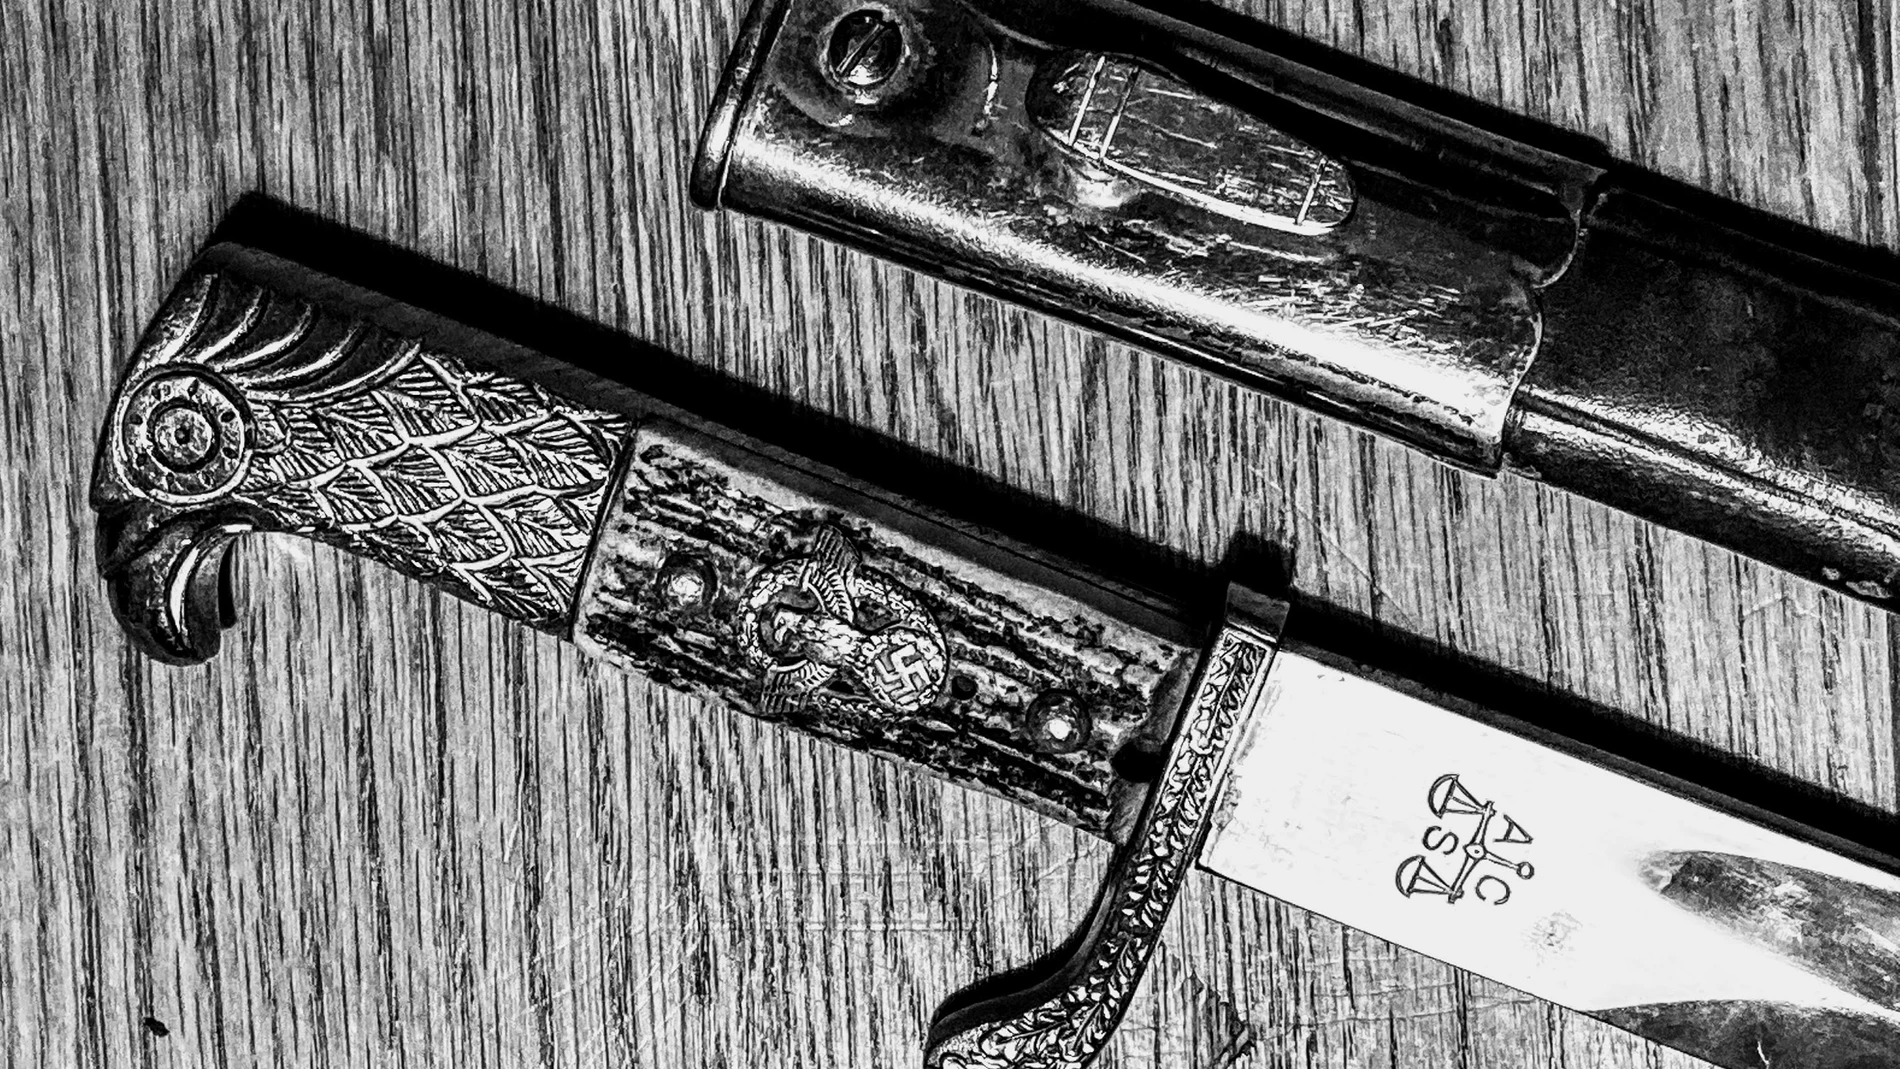 Una terrible ironía del destino: un cuchillo judío para matar judíos